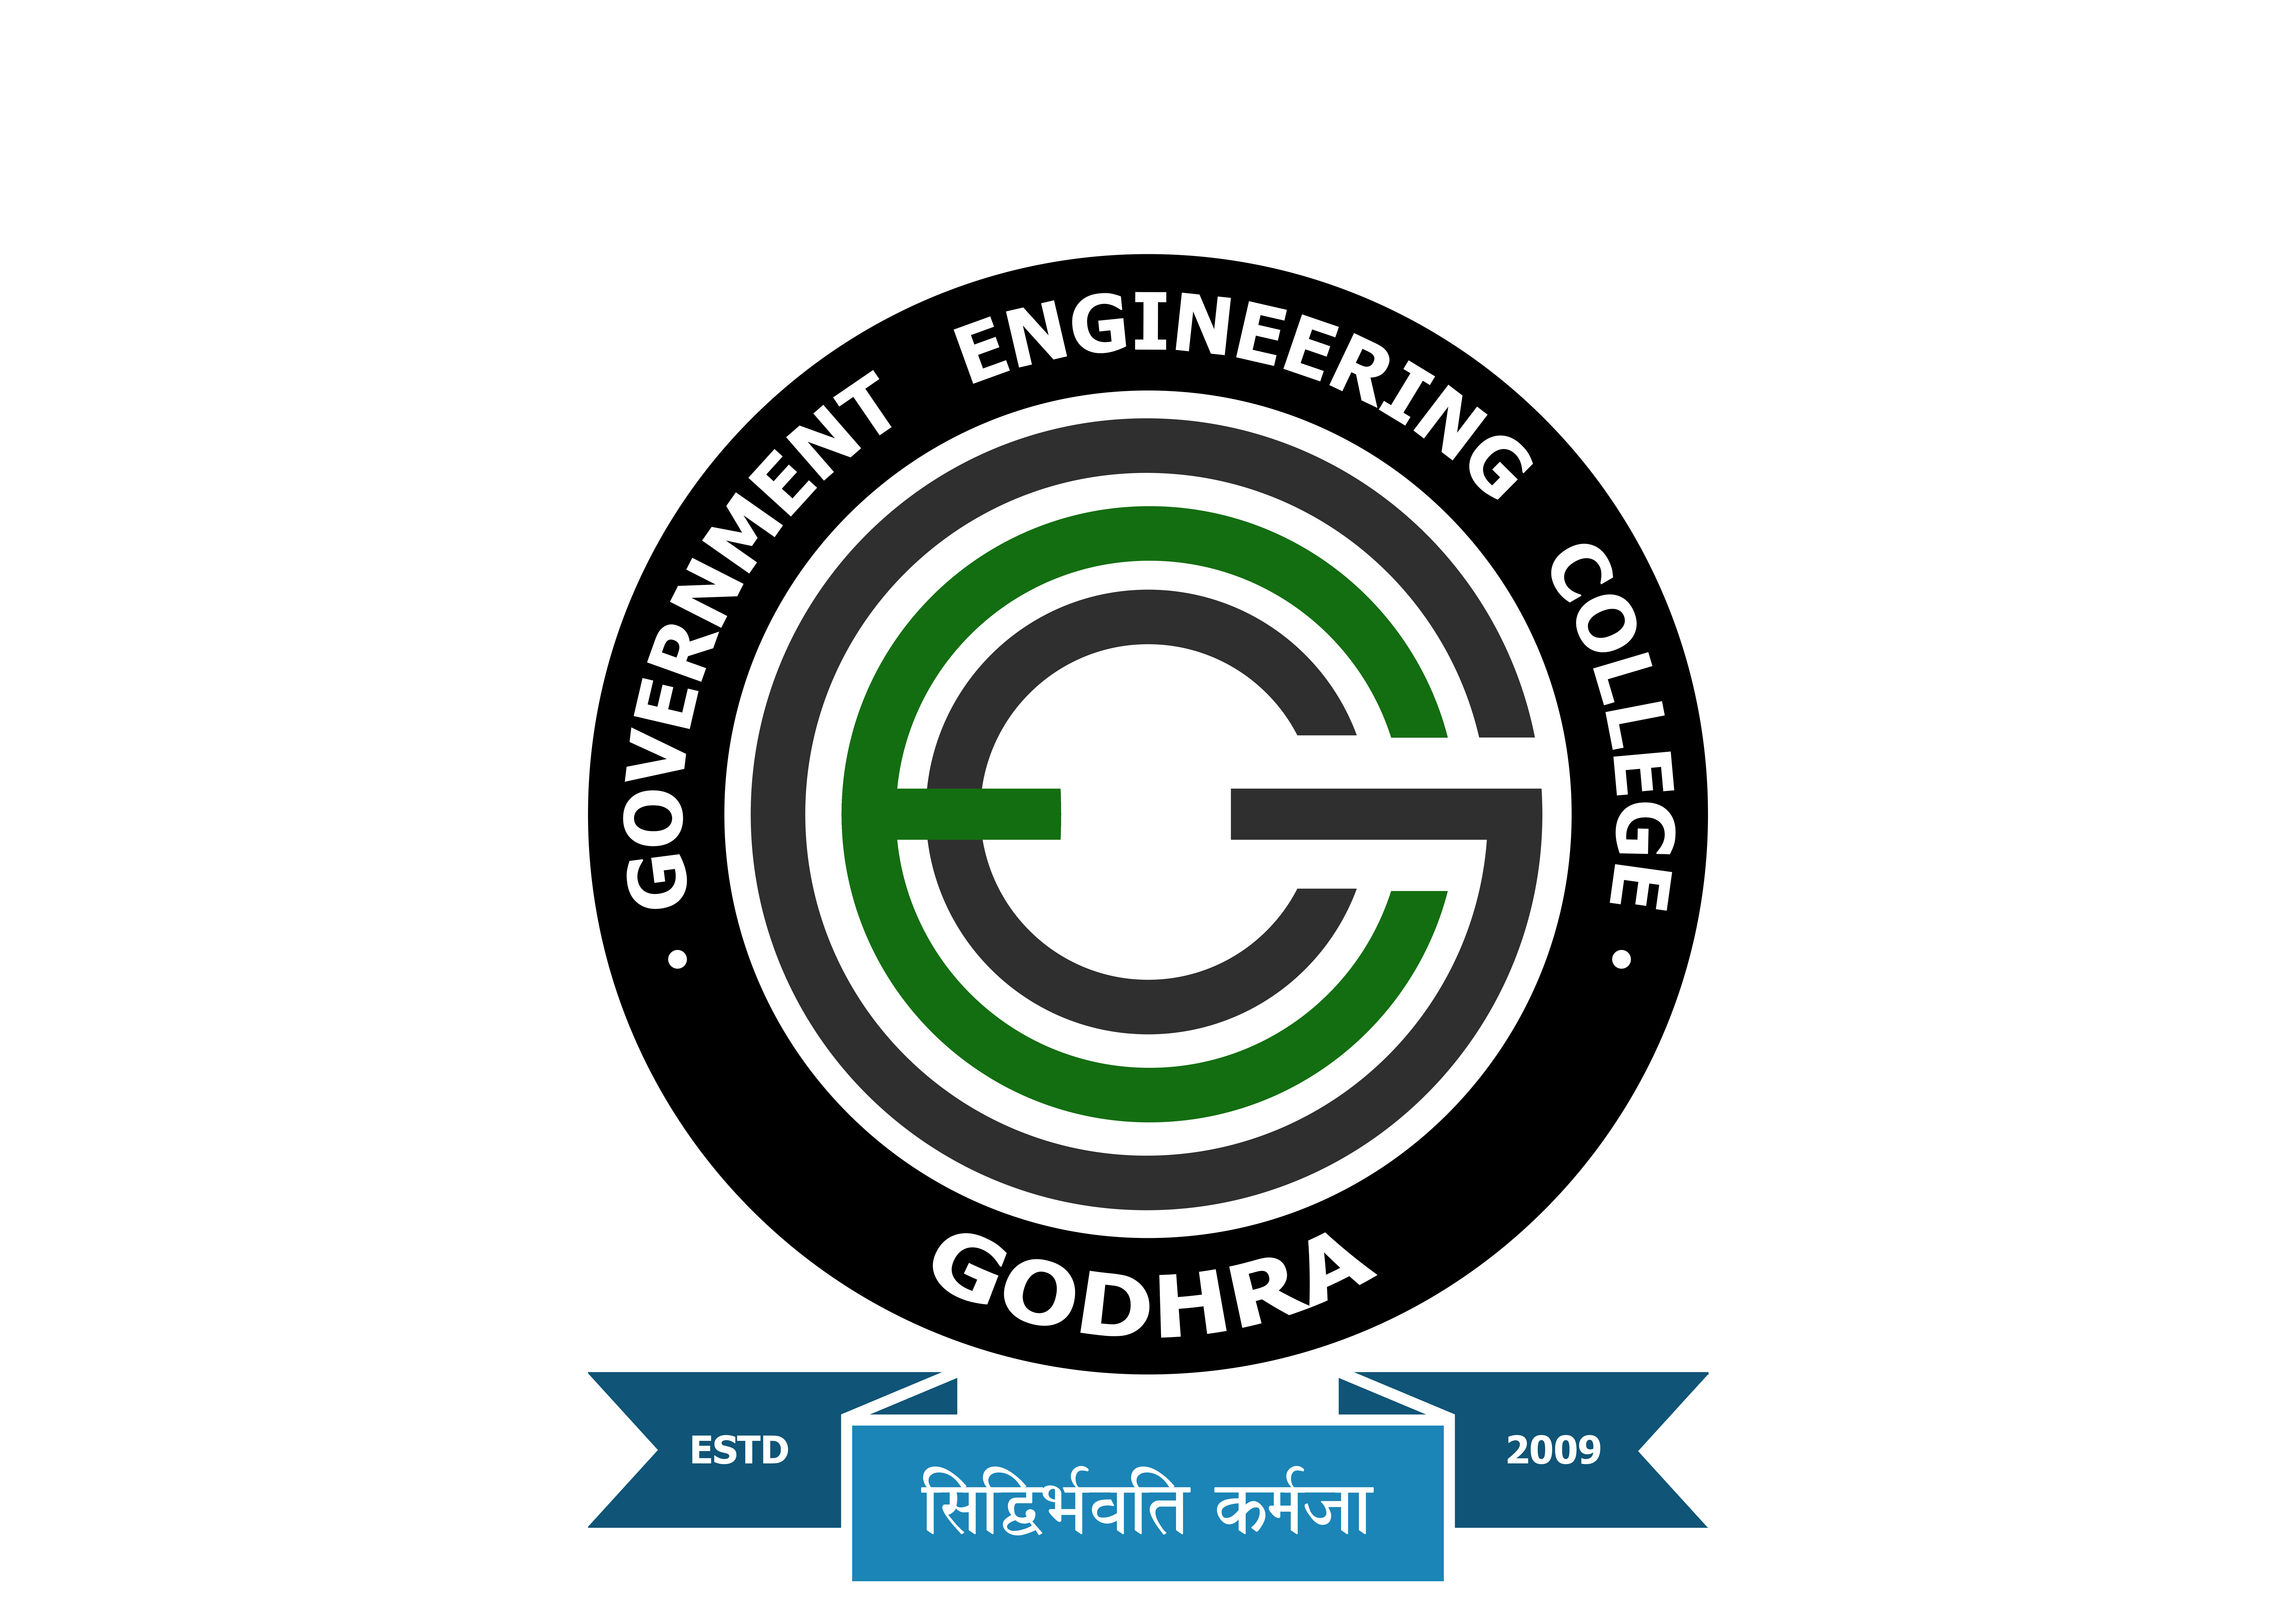 Government Engineering College, Godhra (GEC Godhra)